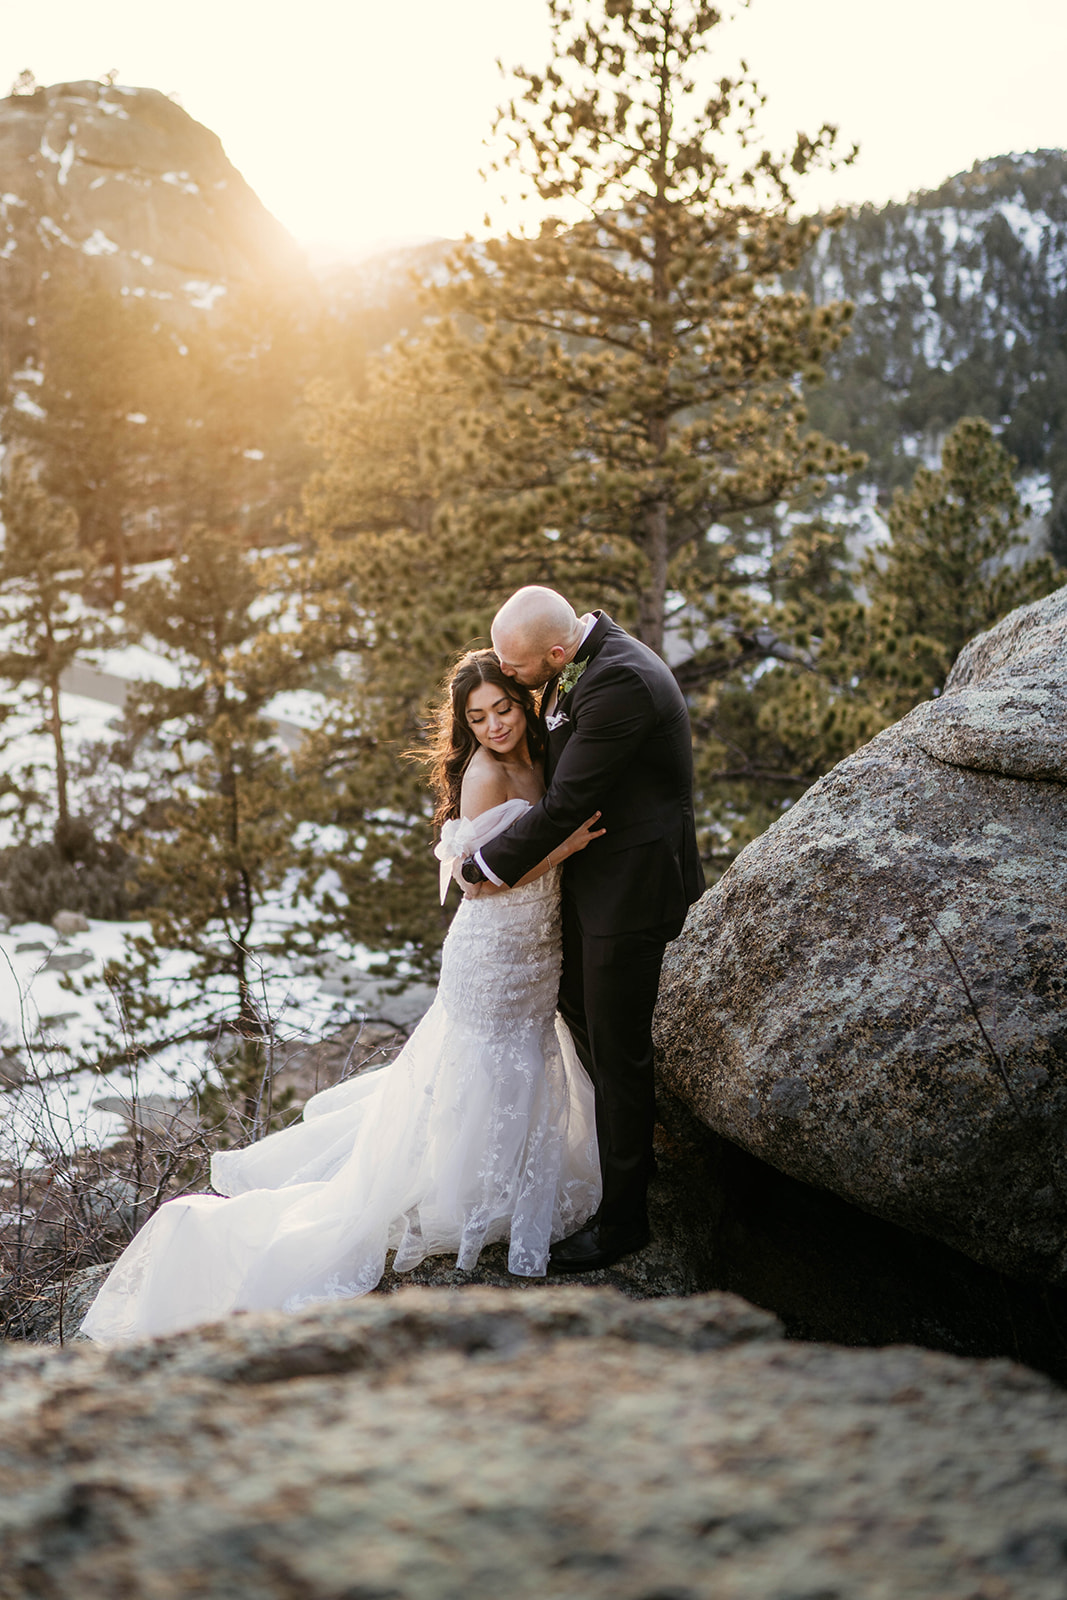 Golden hour couples photos in the forest at winter mountain wedding at Black Canyon Inn in Estes Park, Colorado